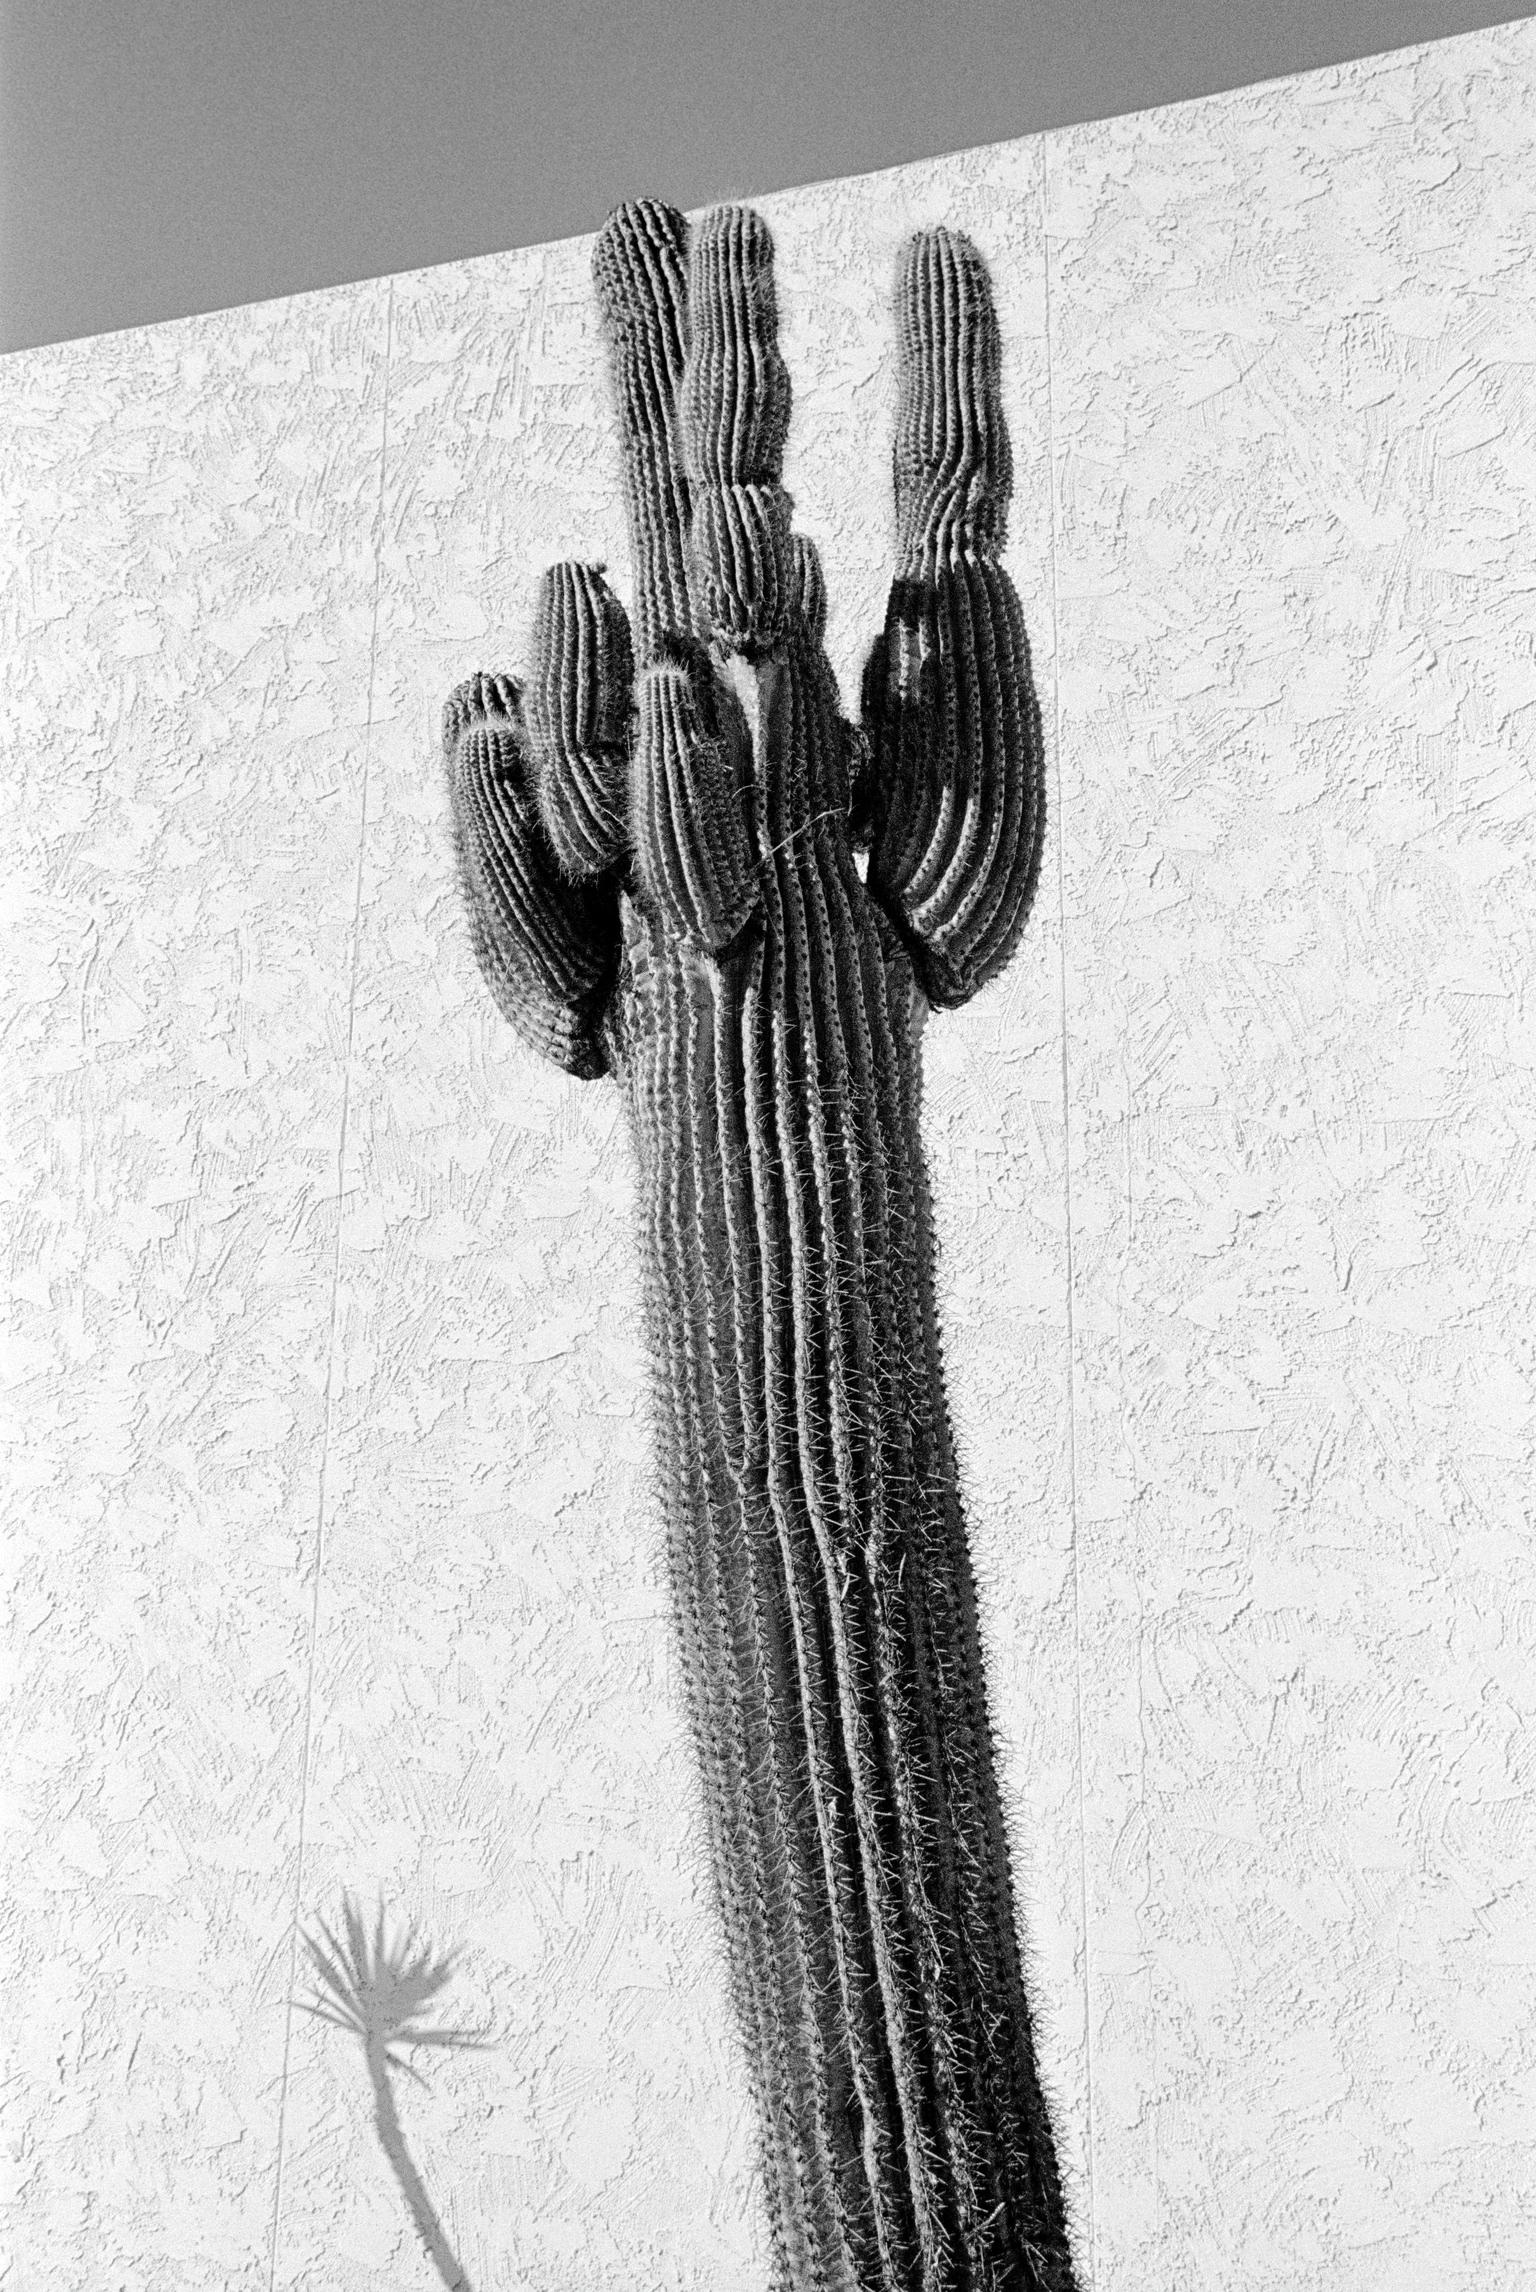 A garden Saguaro Cactus with shadow. Phoenix, Arizona USA